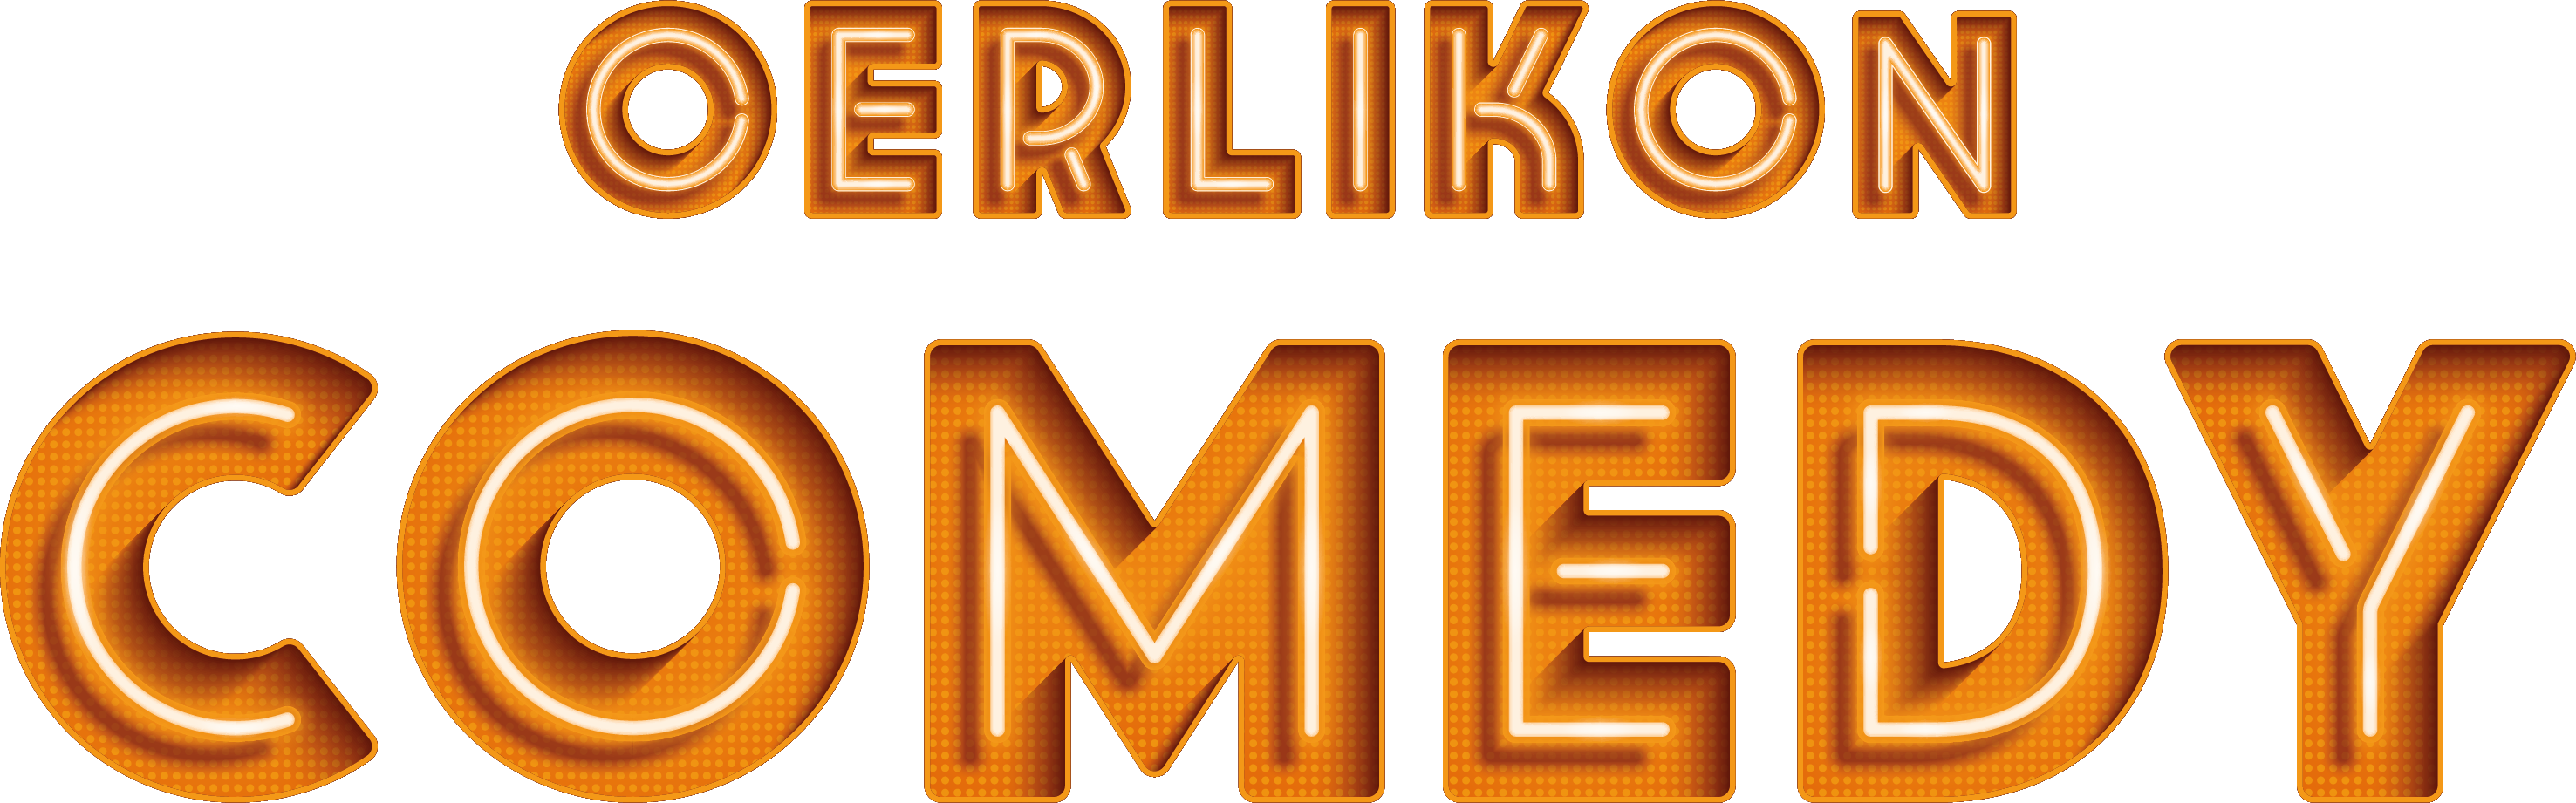 Logo Oerlikon Comedy